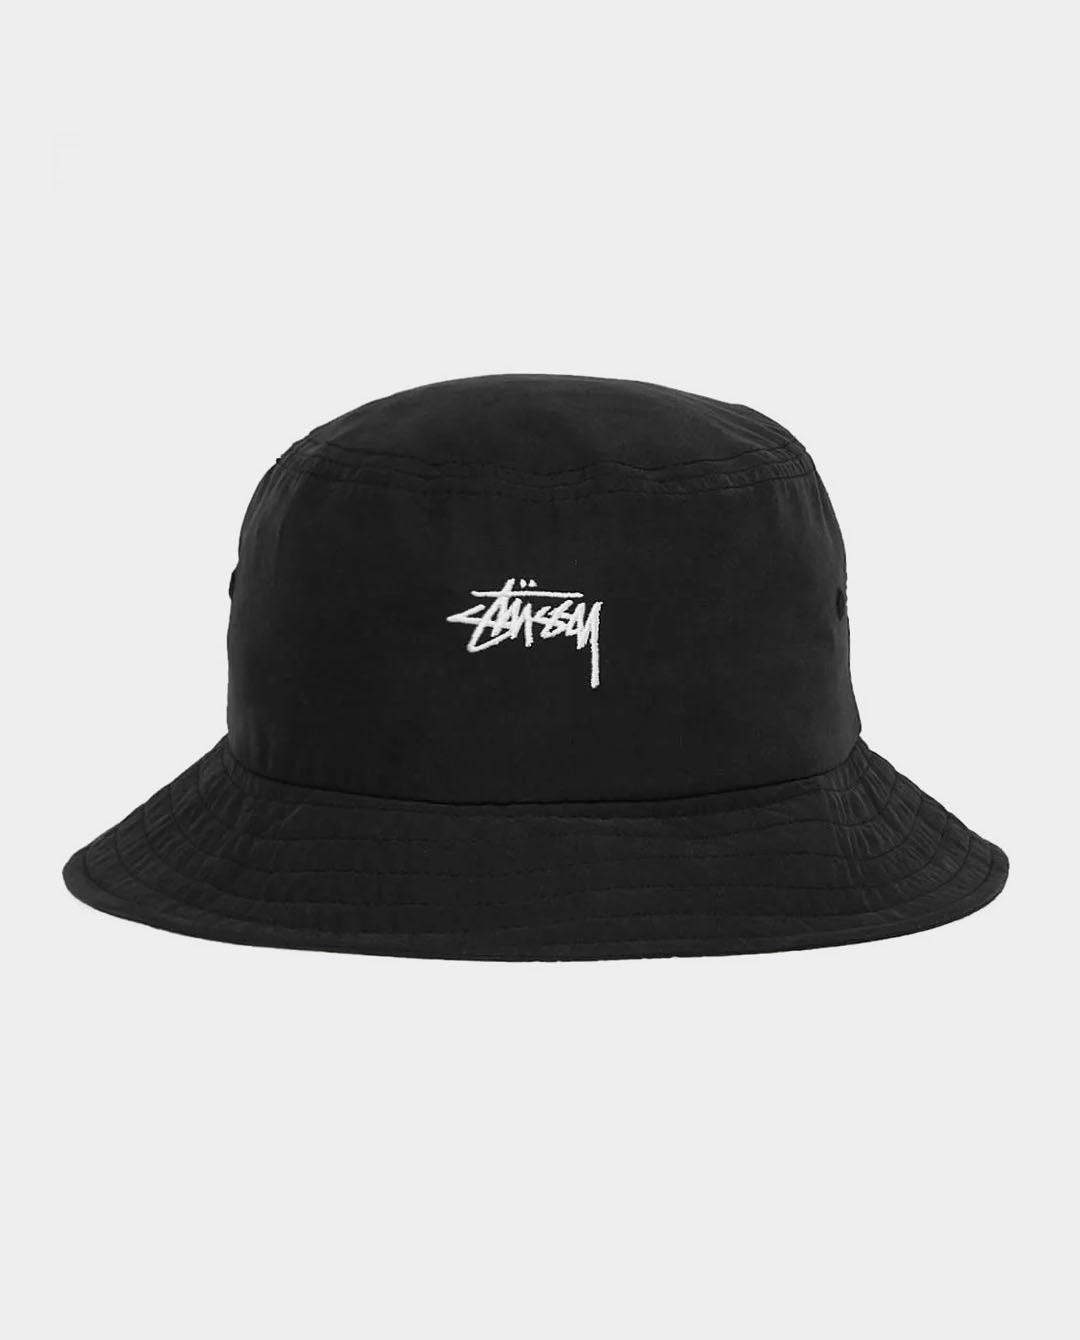 Stussy - Stock Bucket Hat - Black Hats Stussy   